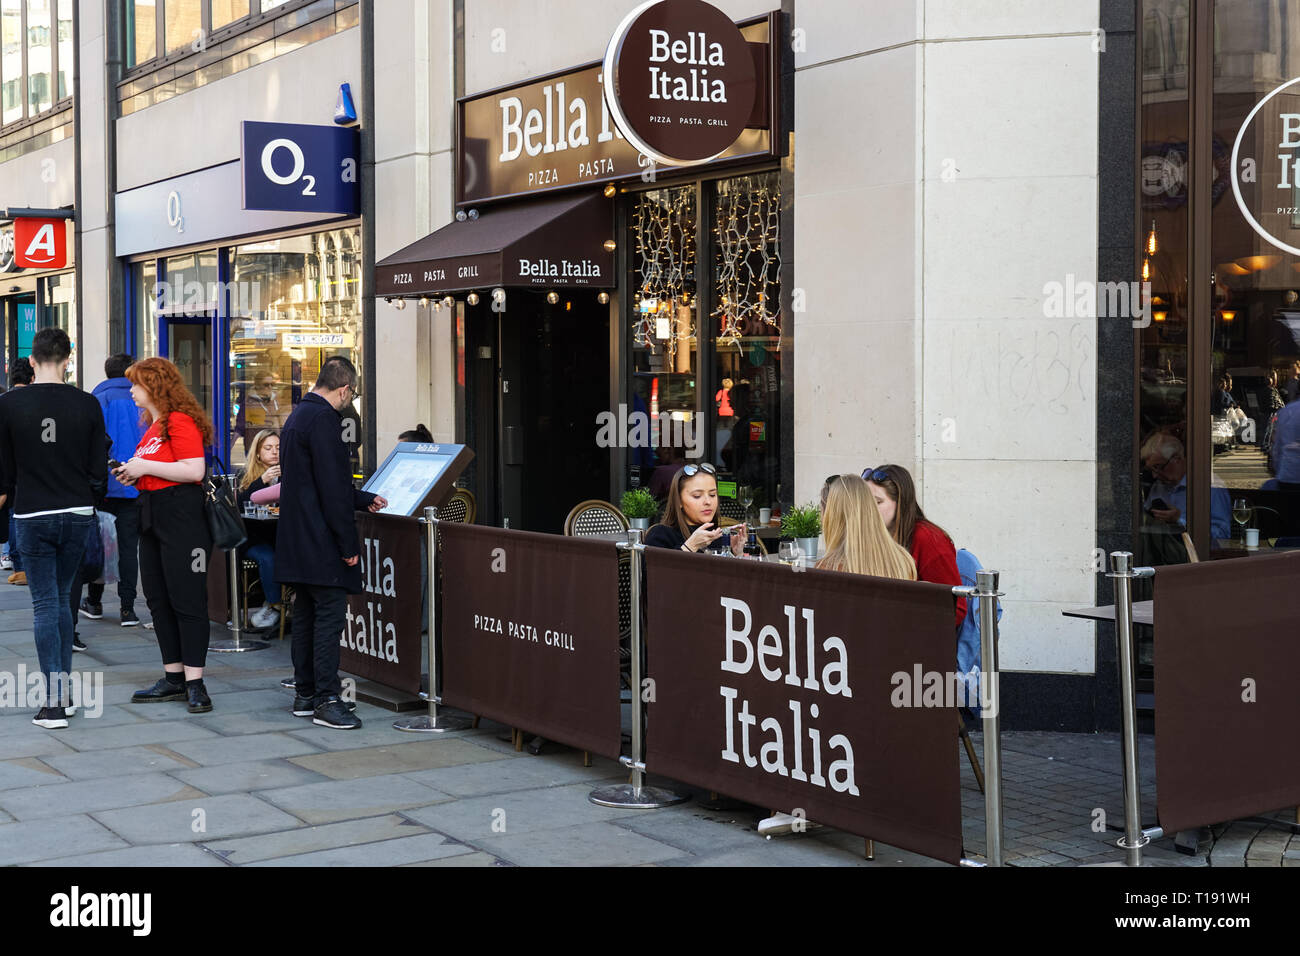 Bella Italia restaurant on Strand, London England United Kingdom UK Stock Photo